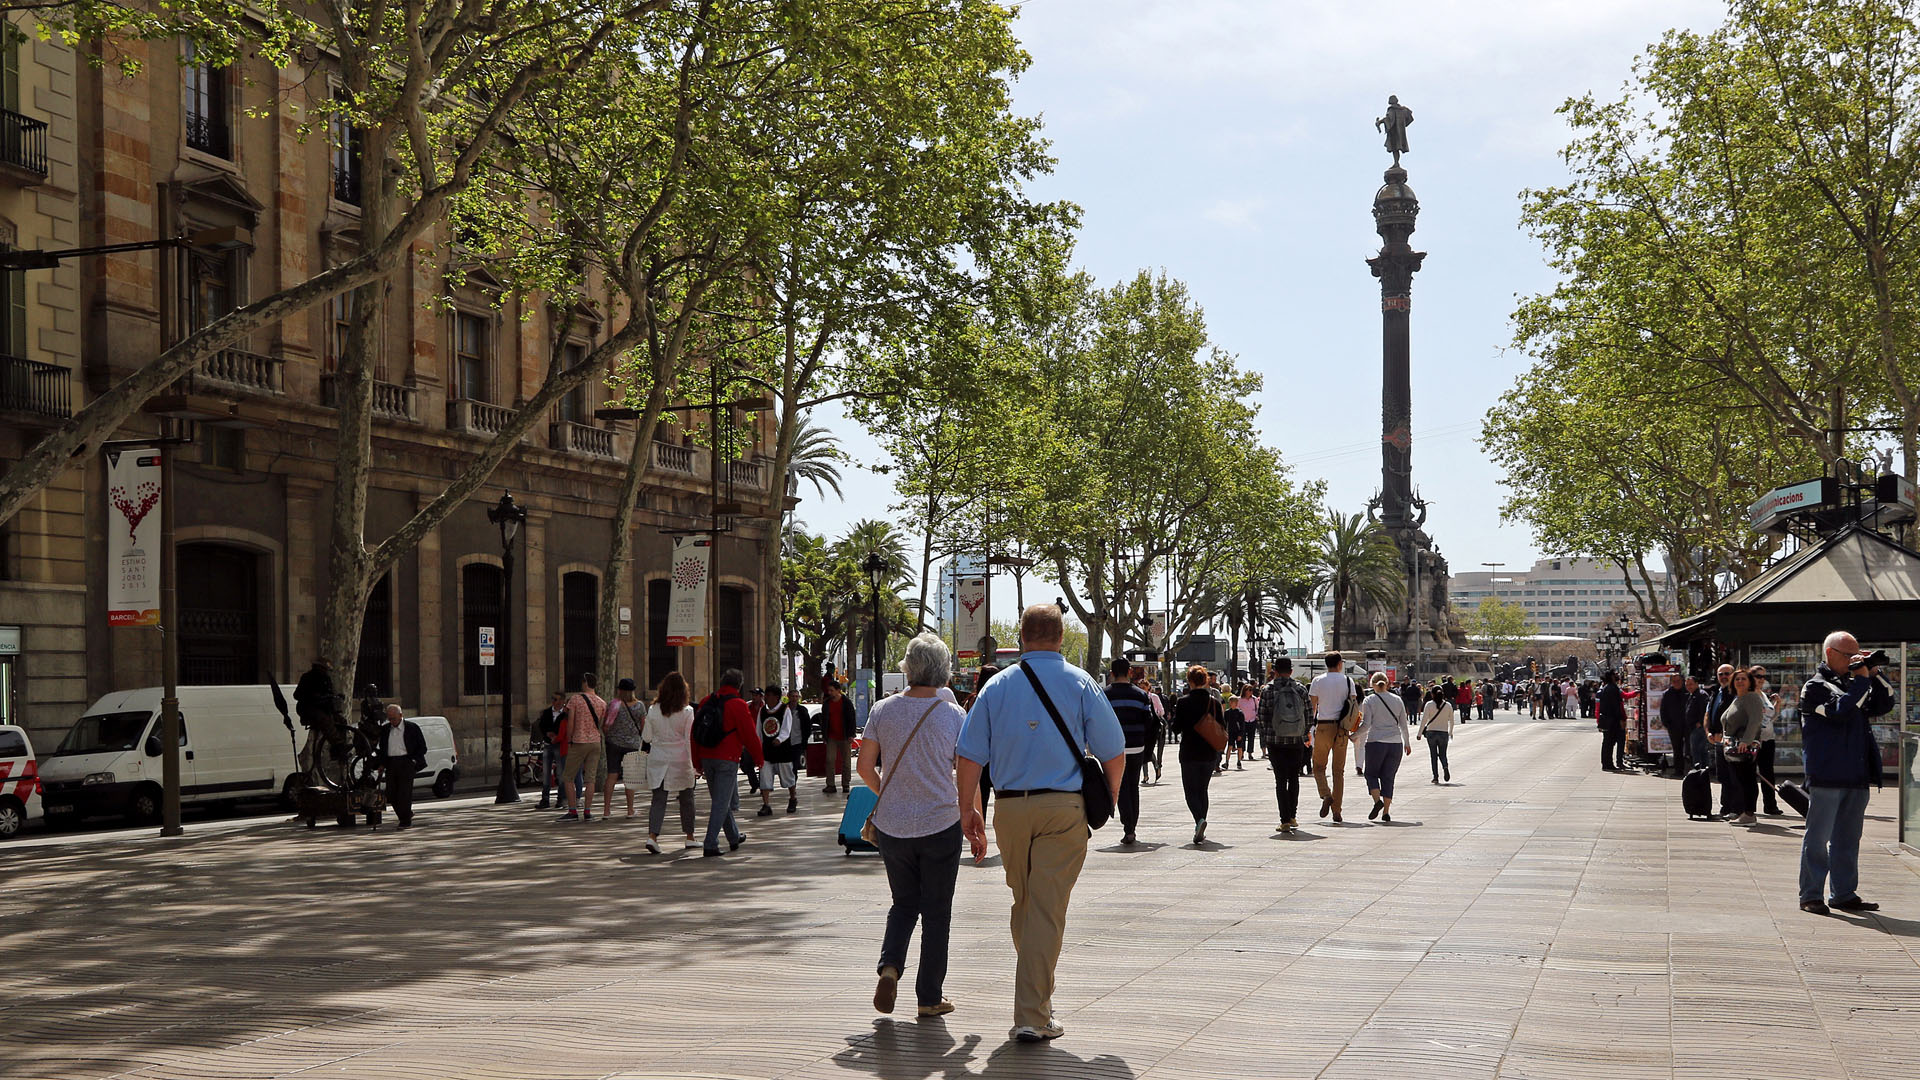 File:Spain -Barcelona, La Rambla and Mirador de Colom - panoramio.jpg - Wikimedia Commons